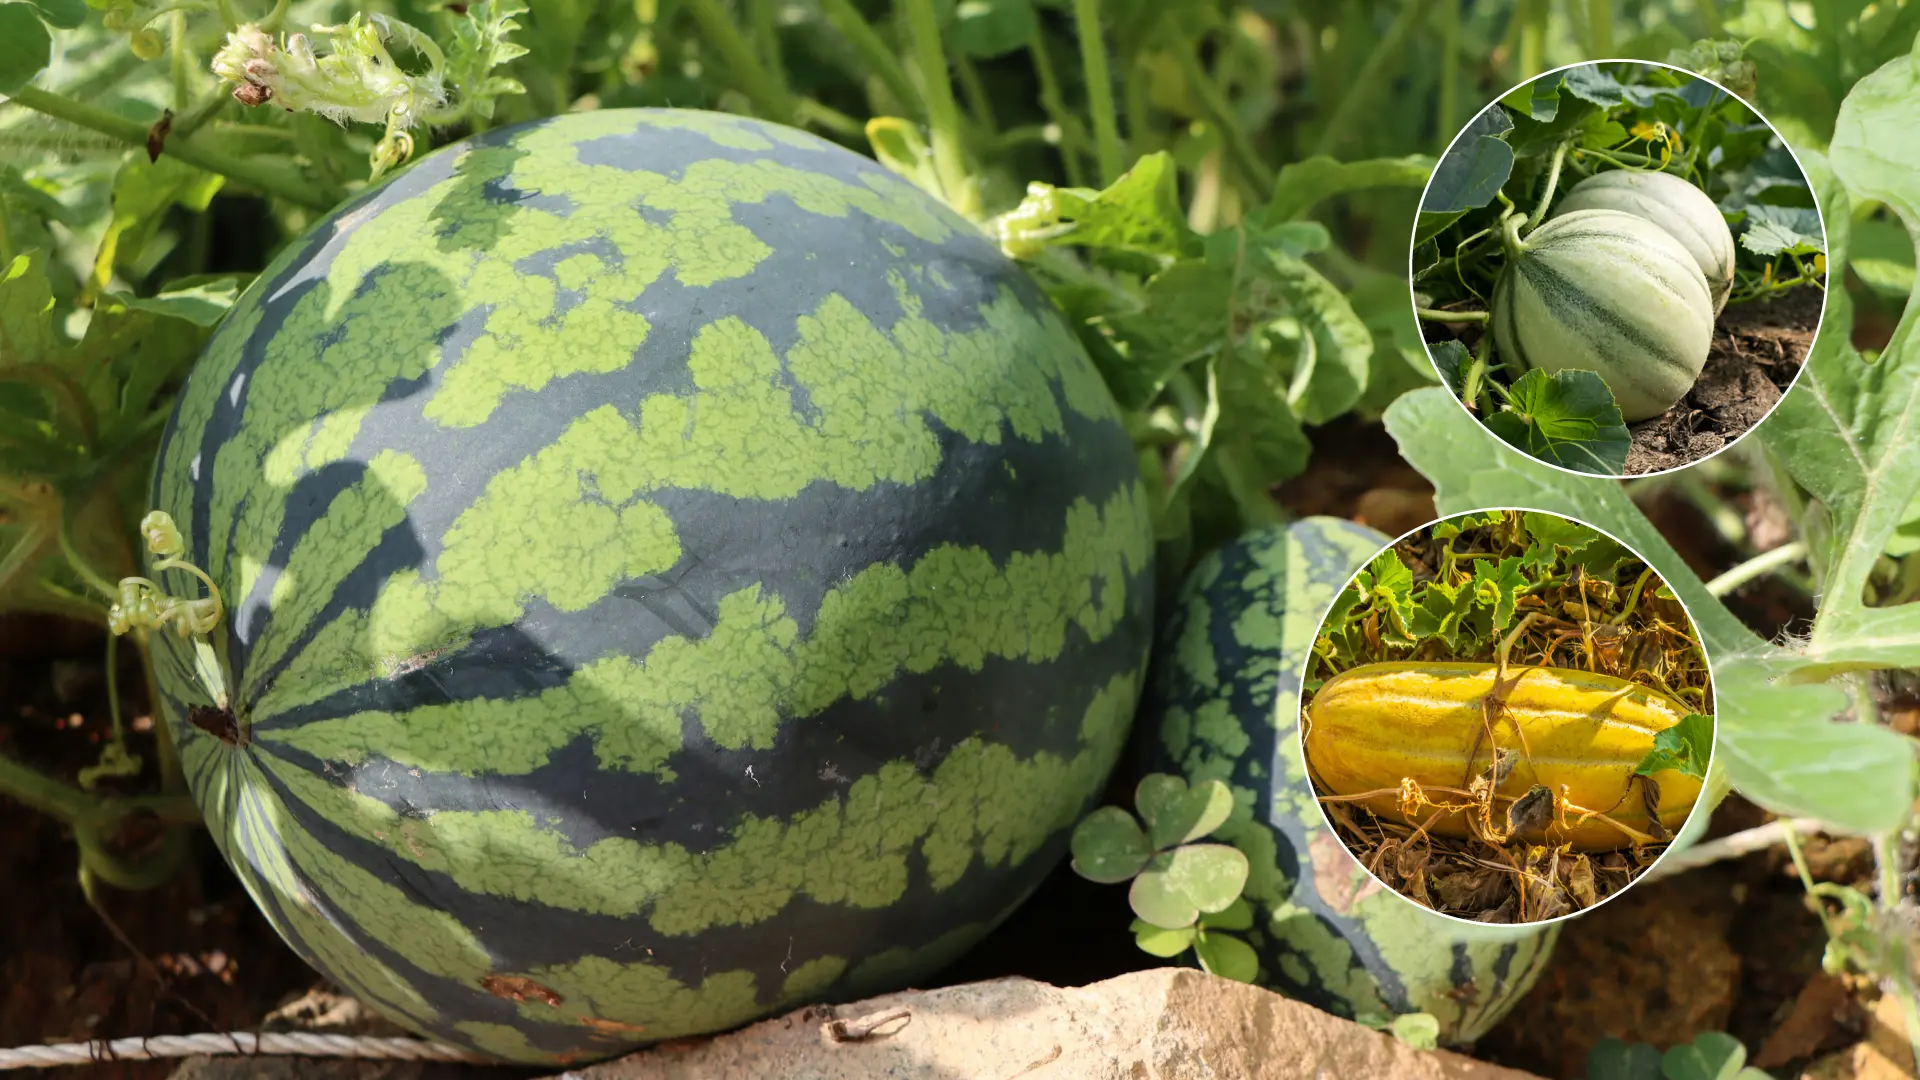 برنامه کودی برای کشت هندوانه و خربزه https://seedsnsuch.com/blogs/gardeners-greenroom/grow-the-sweetest-watermelon-from-seed